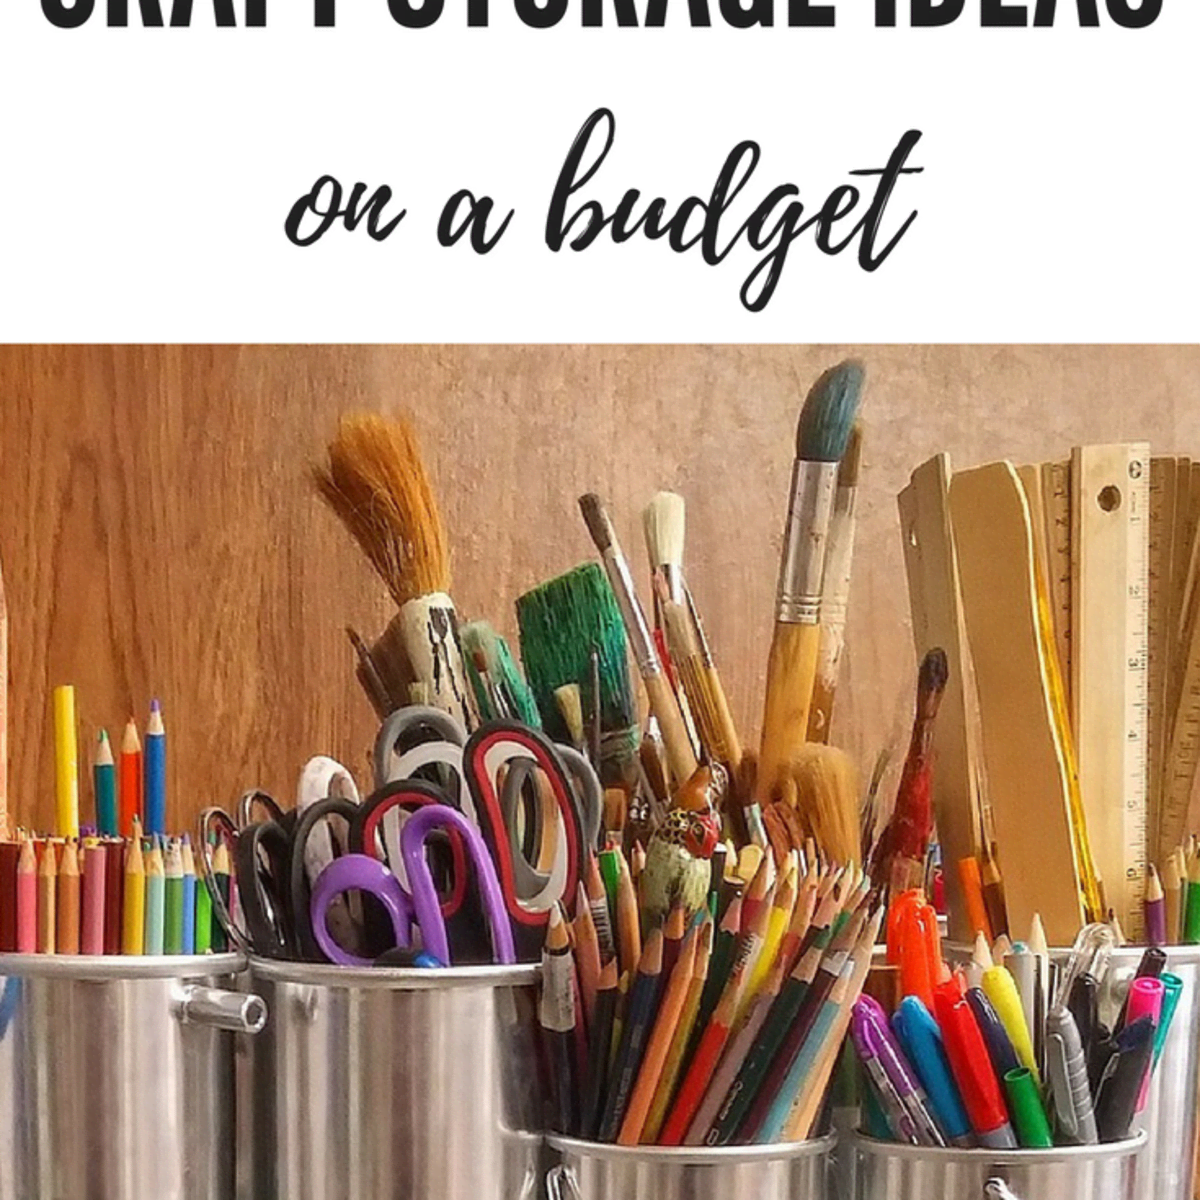 10 Craft Storage Ideas on a Budget - FeltMagnet